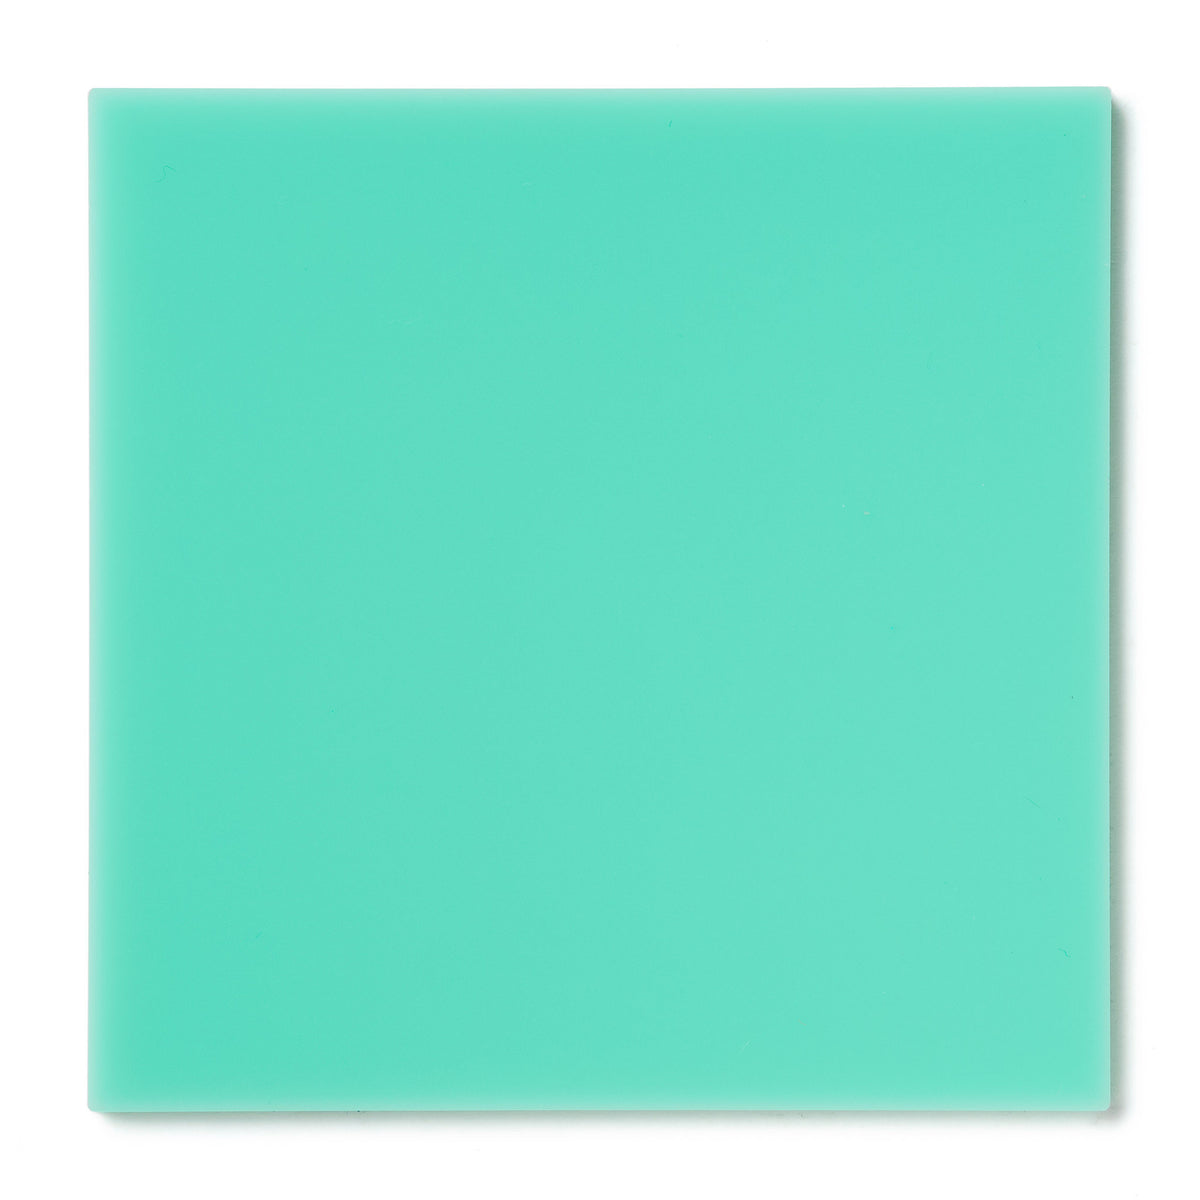 Turquoise Opaque Acrylic Plexiglass Sheet, color 2324